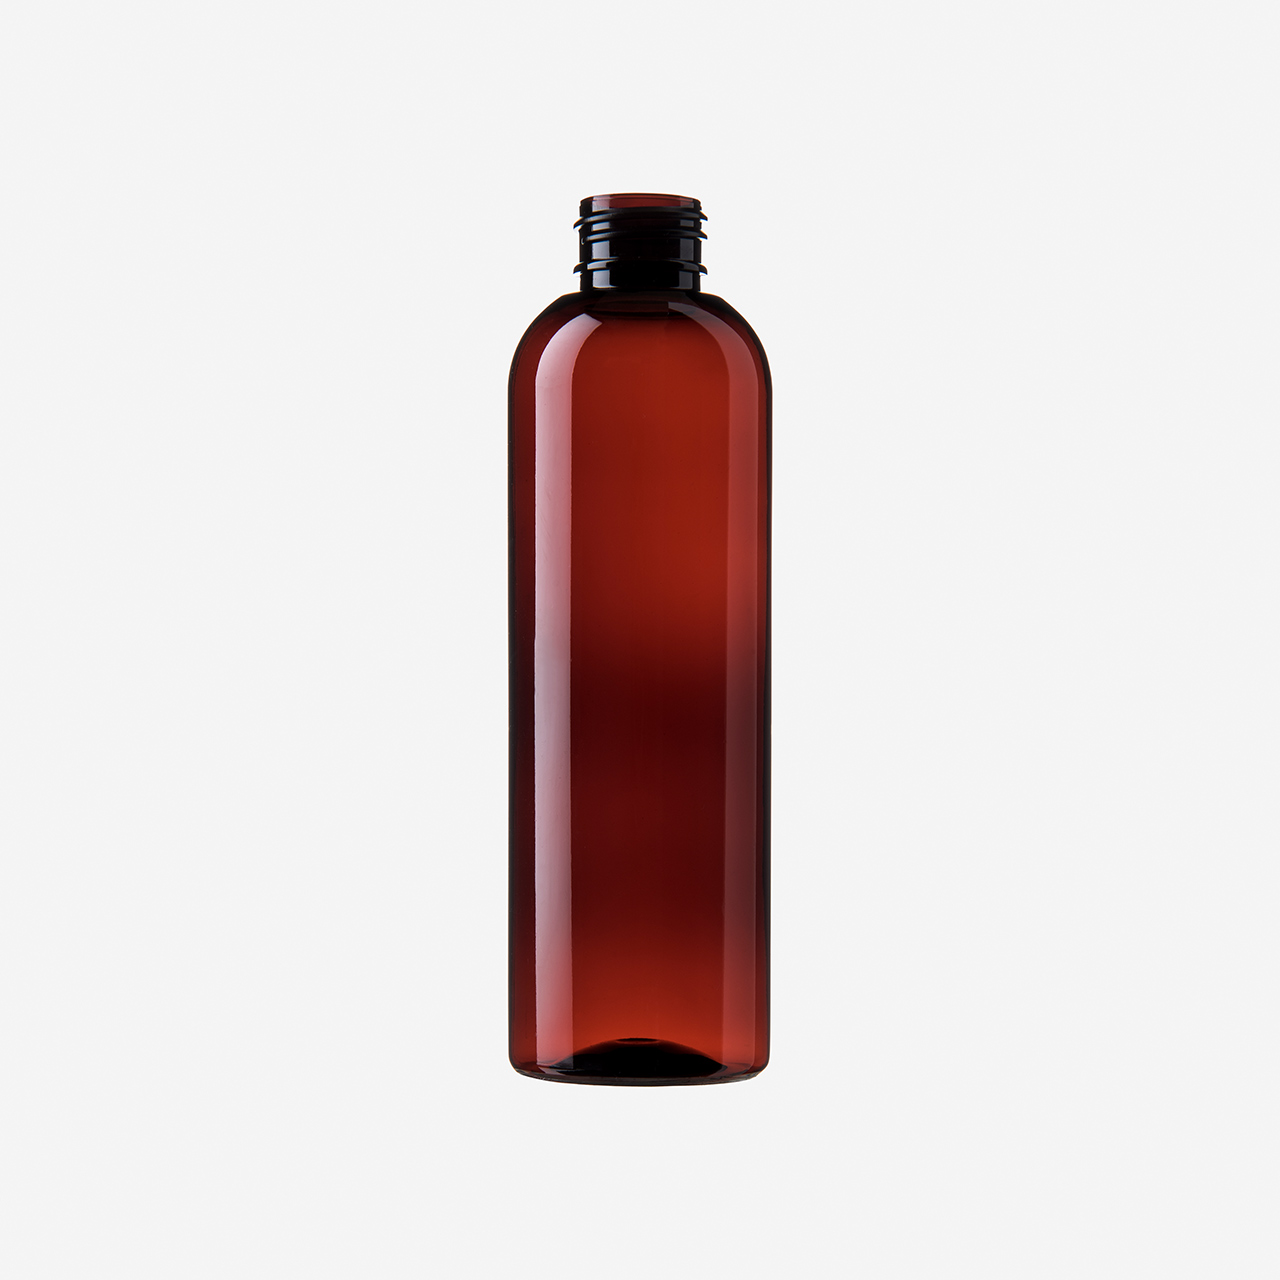 150 ml Tall Boston Round rPET Flasche braun transparent (VPE à 1.728 Flaschen)  